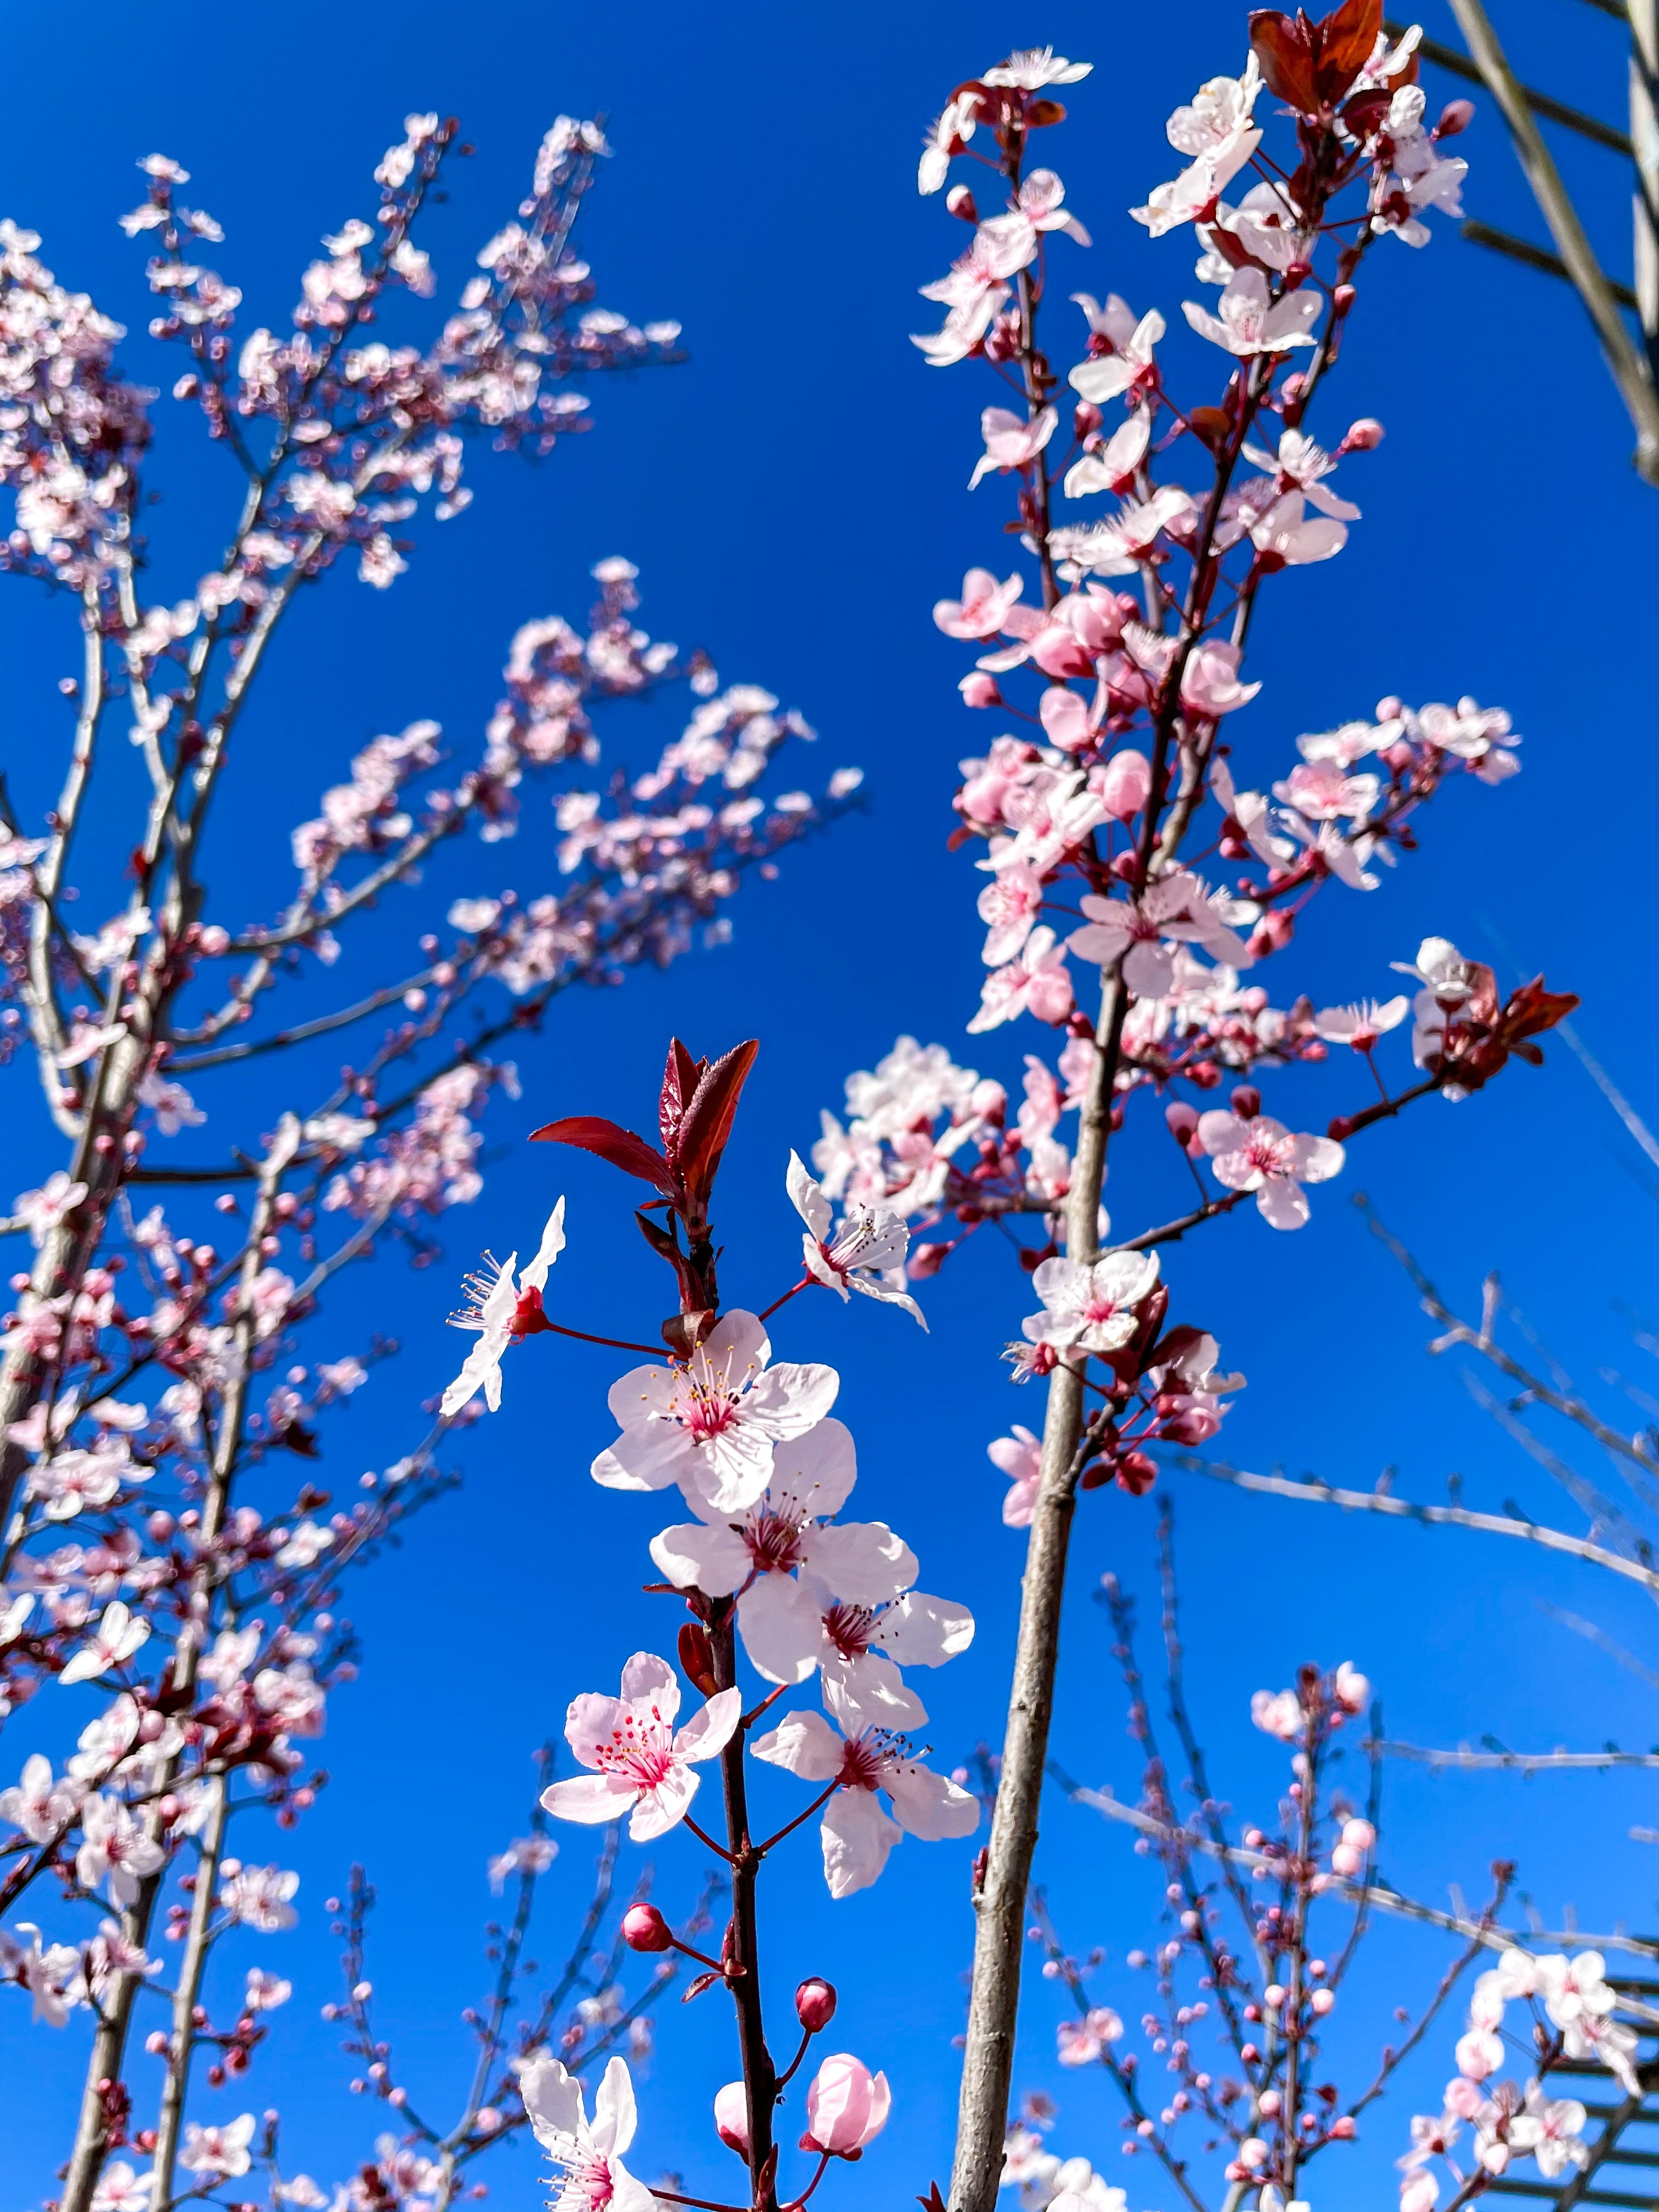 High Definition Cherry Blossom background